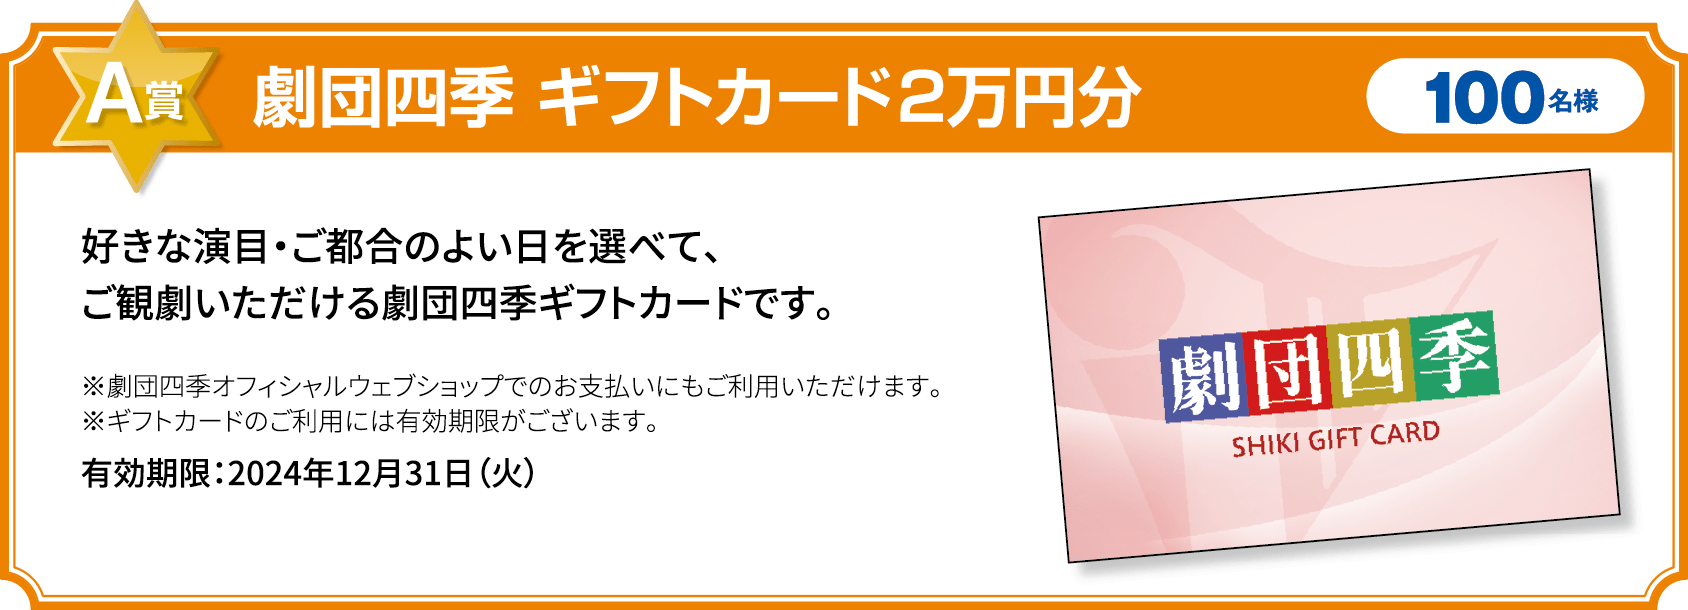 A賞 劇団四季 ギフトカード2万円分